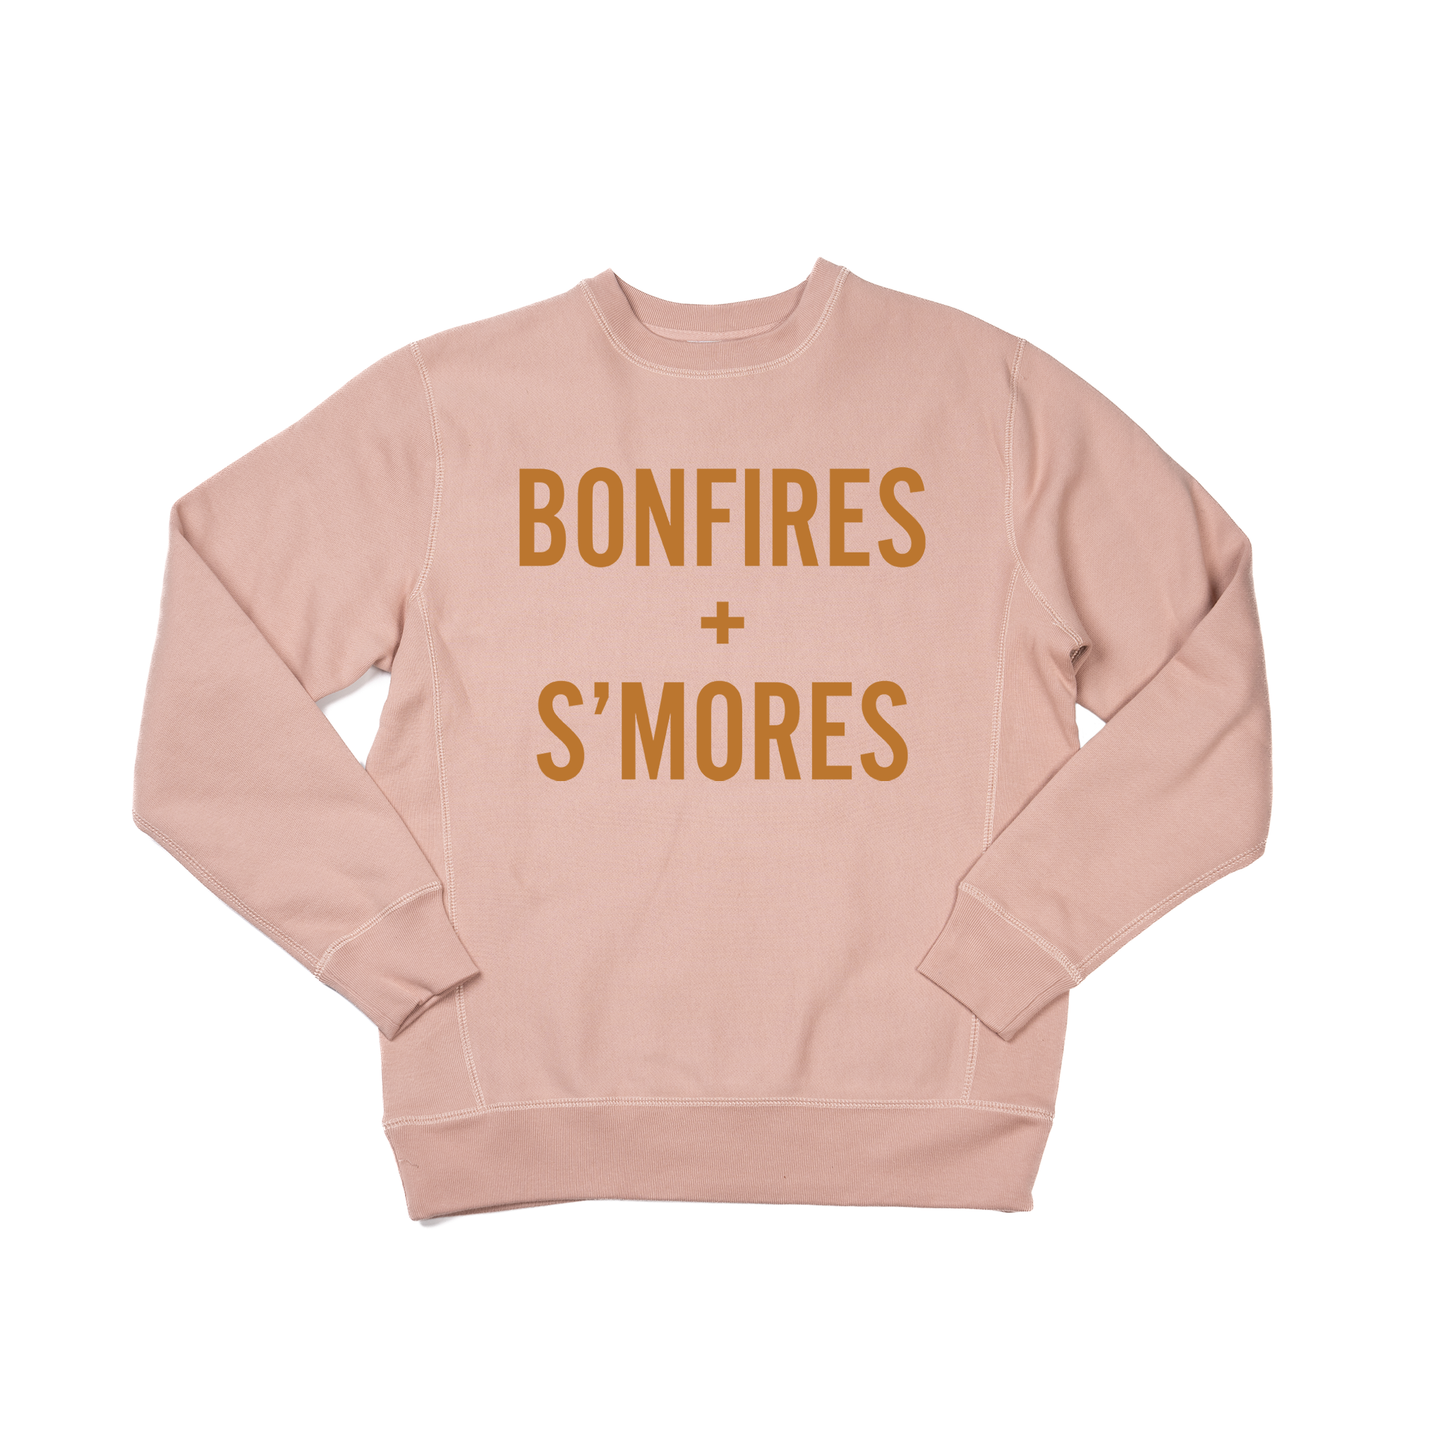 Bonfires + S'mores (Camel) - Heavyweight Sweatshirt (Dusty Rose)